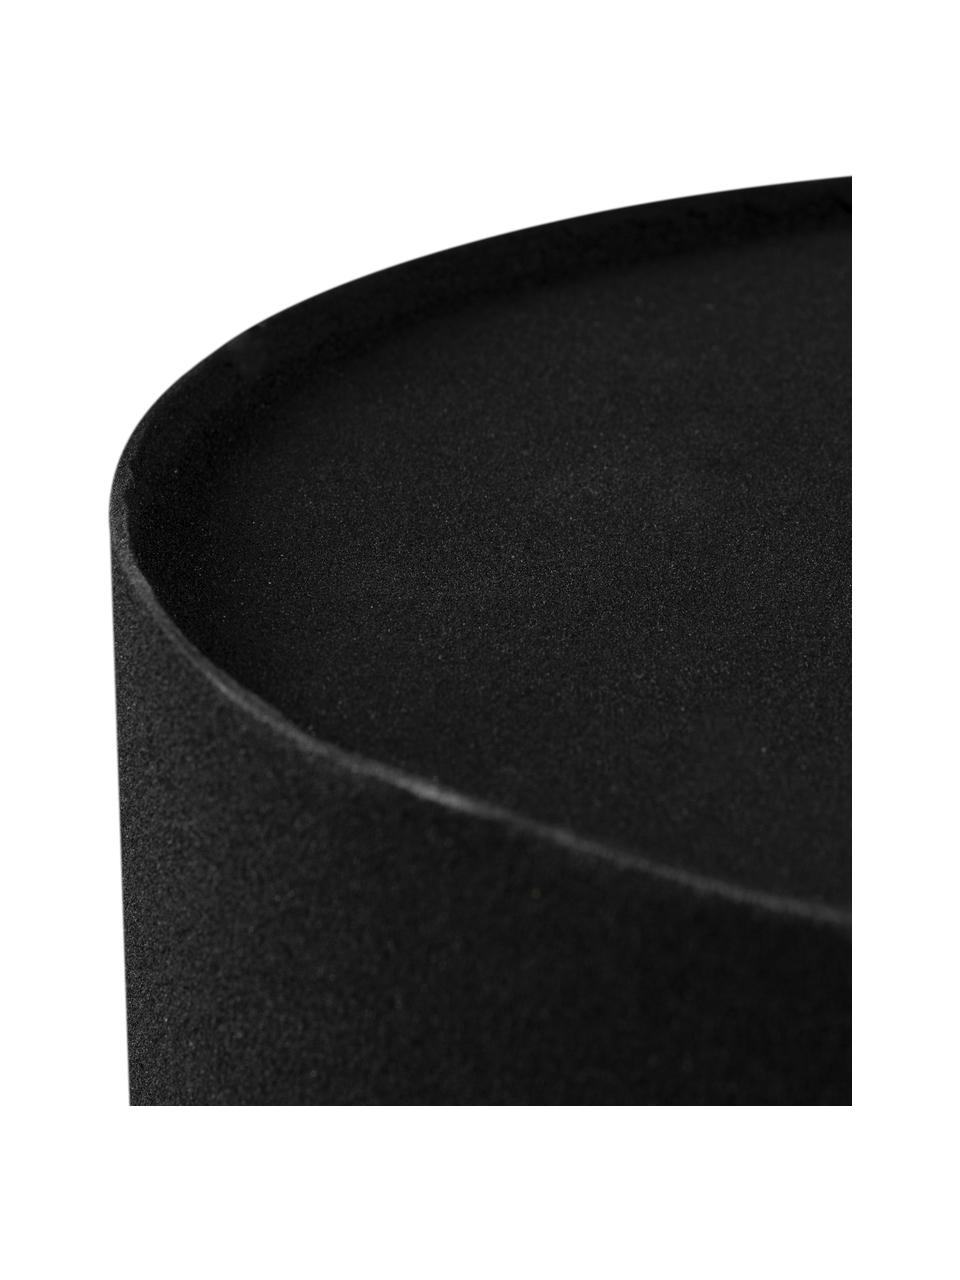 Kulatý kovový odkládací stolek Sai, Kov s práškovým nástřikem, Černá, Ø 30 cm, V 56 cm